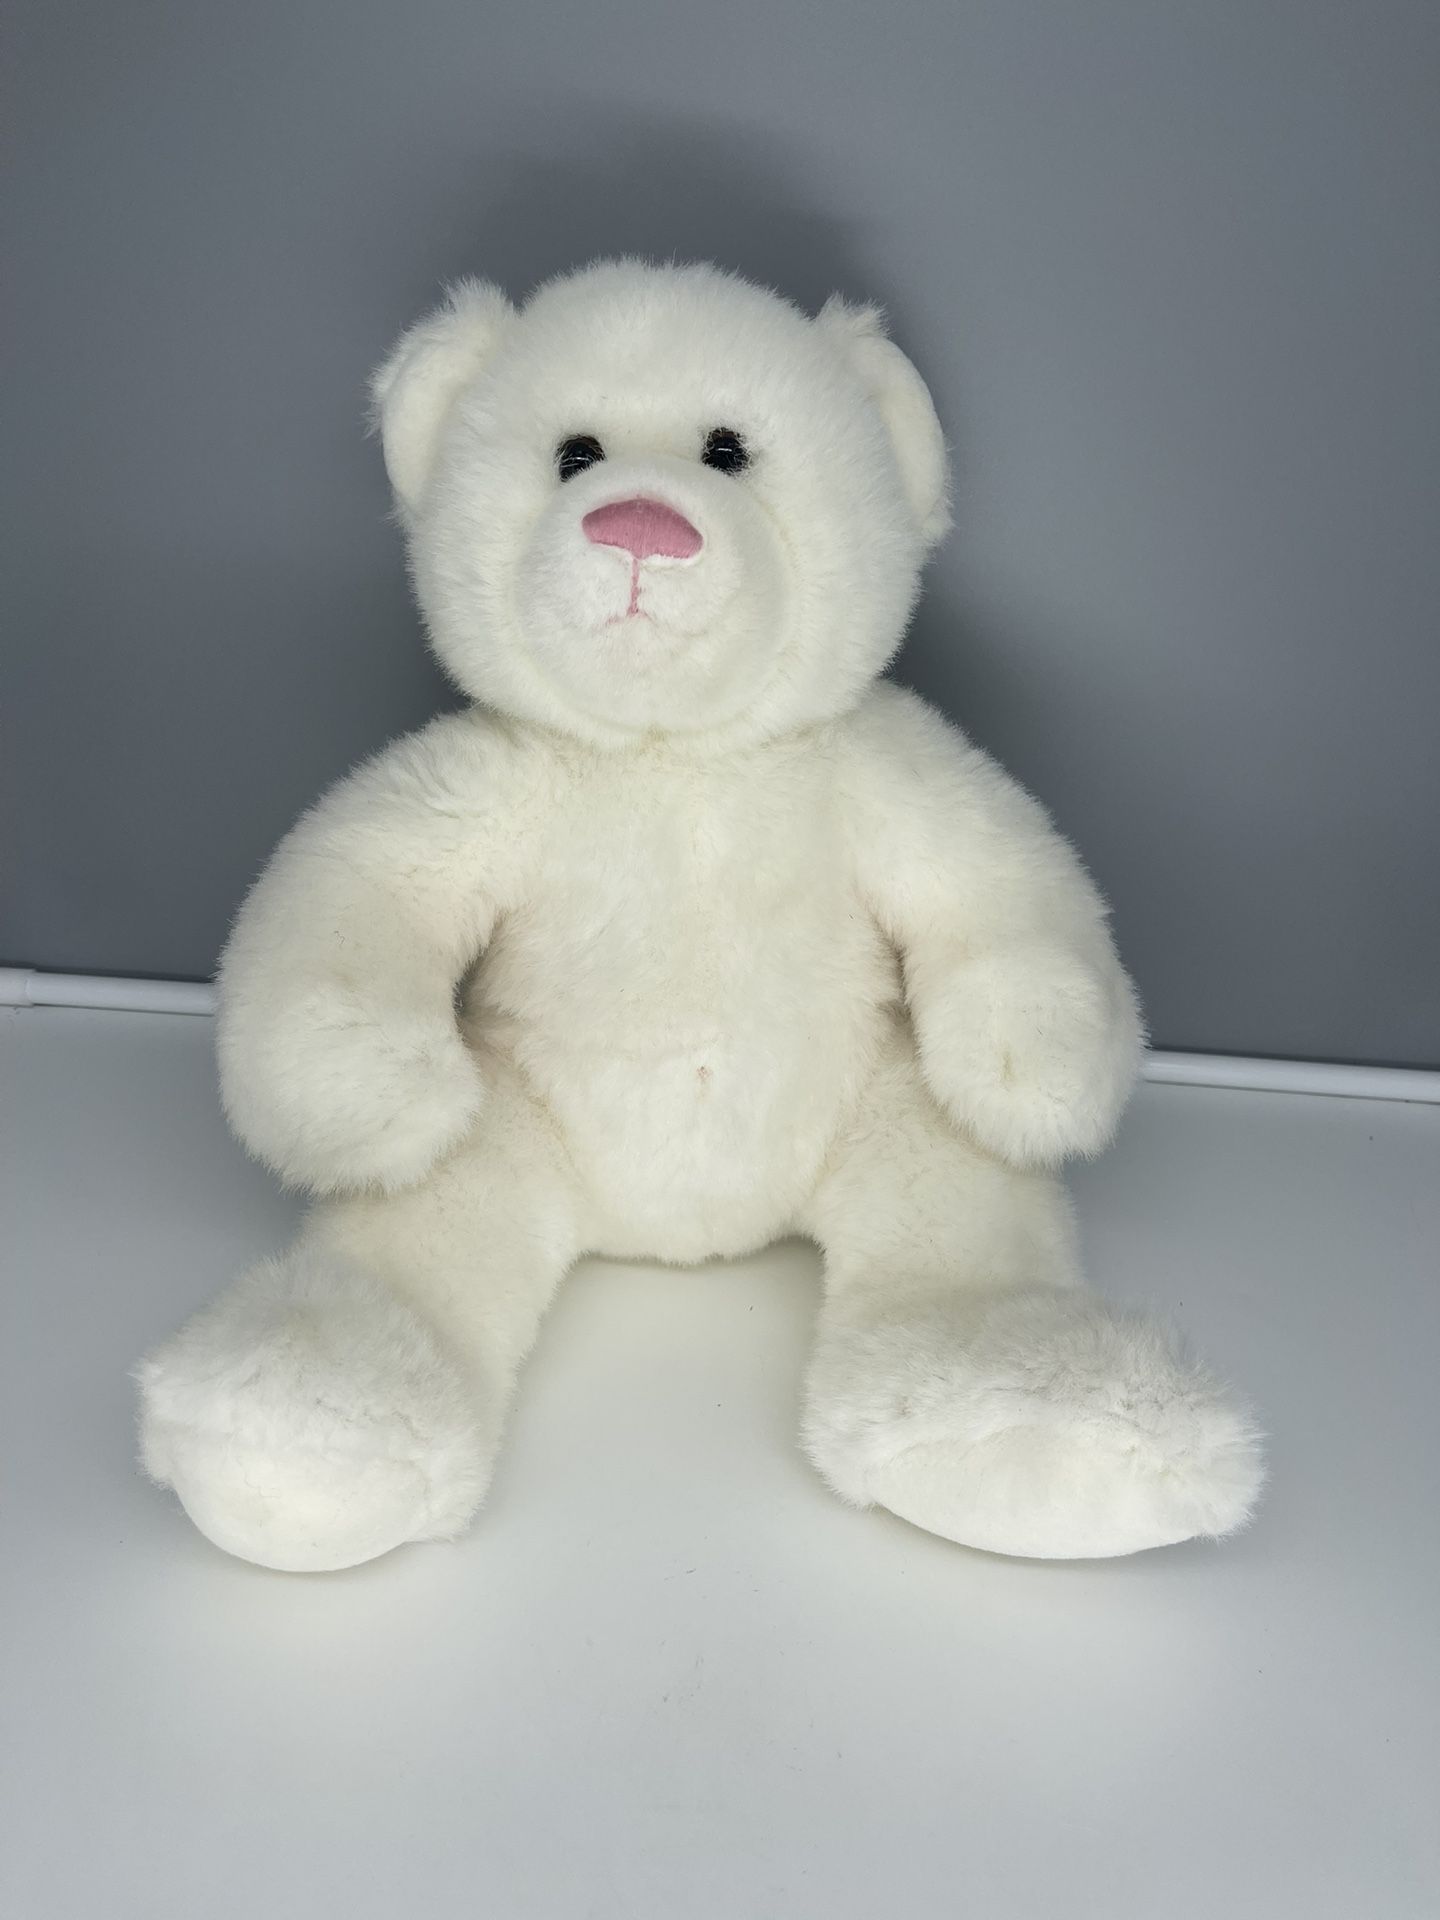 Vintage Build A Bear Plush White Bear Pink Nose Stuffed Animal 1990s